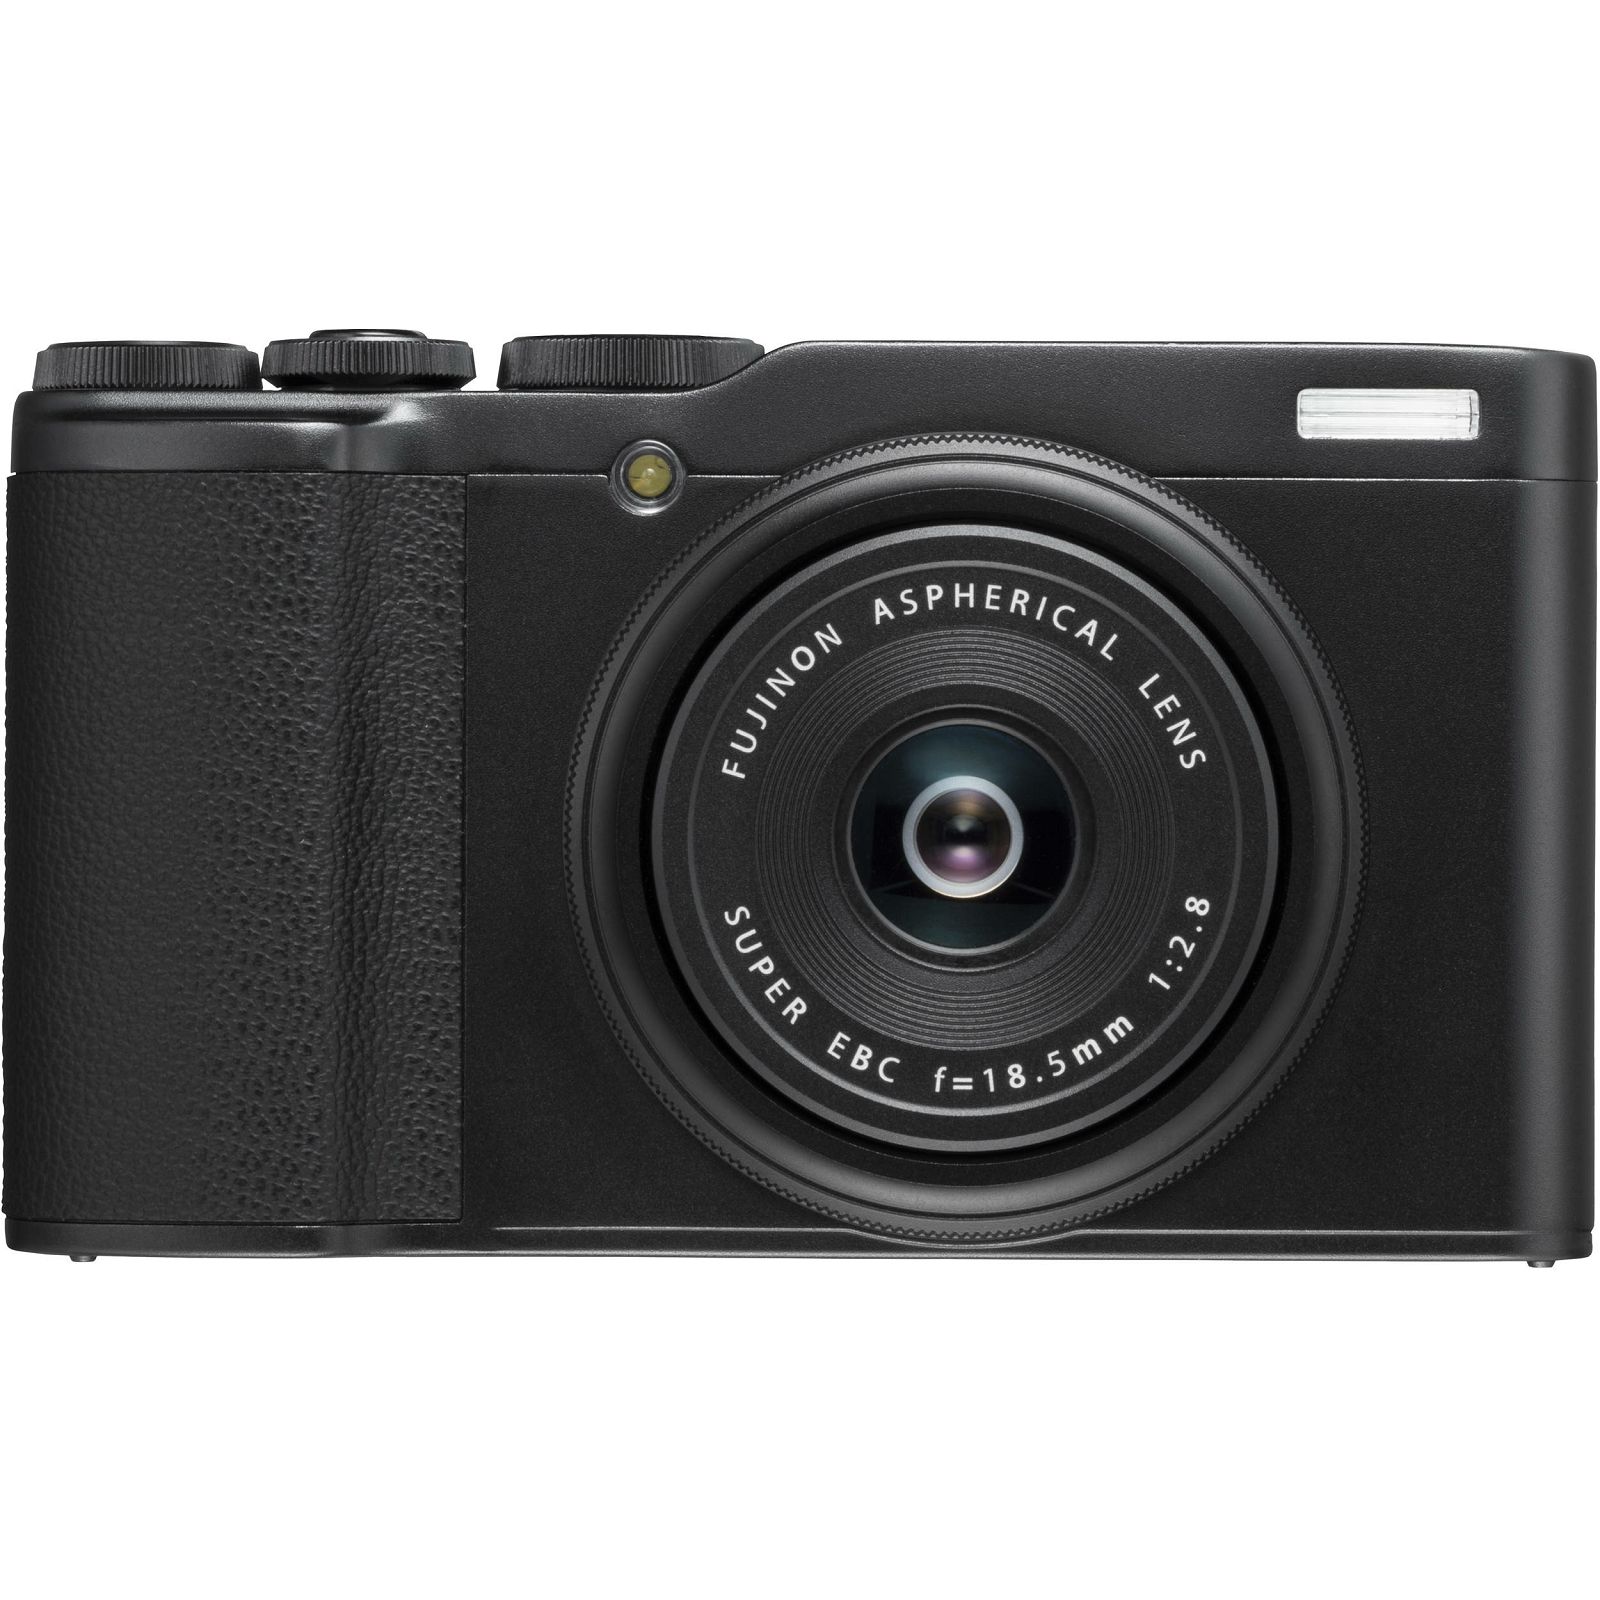 Fujifilm XF10 Black crni digitalni fotoaparat s integriranim objektivom Fuji Finepix XF10